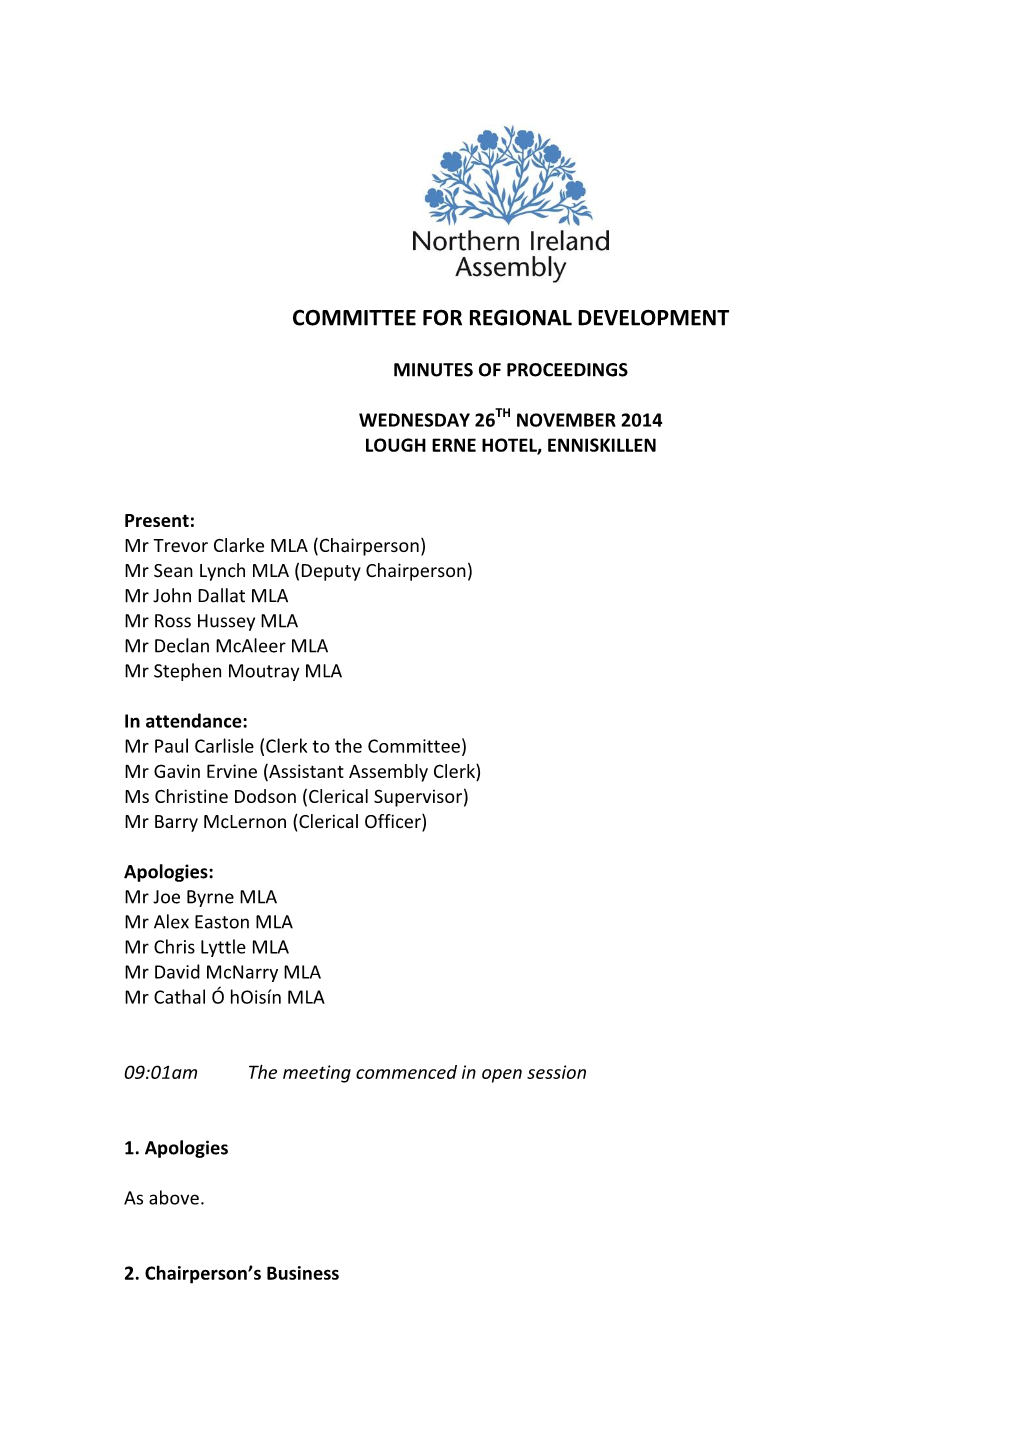 Committee for Regional Development